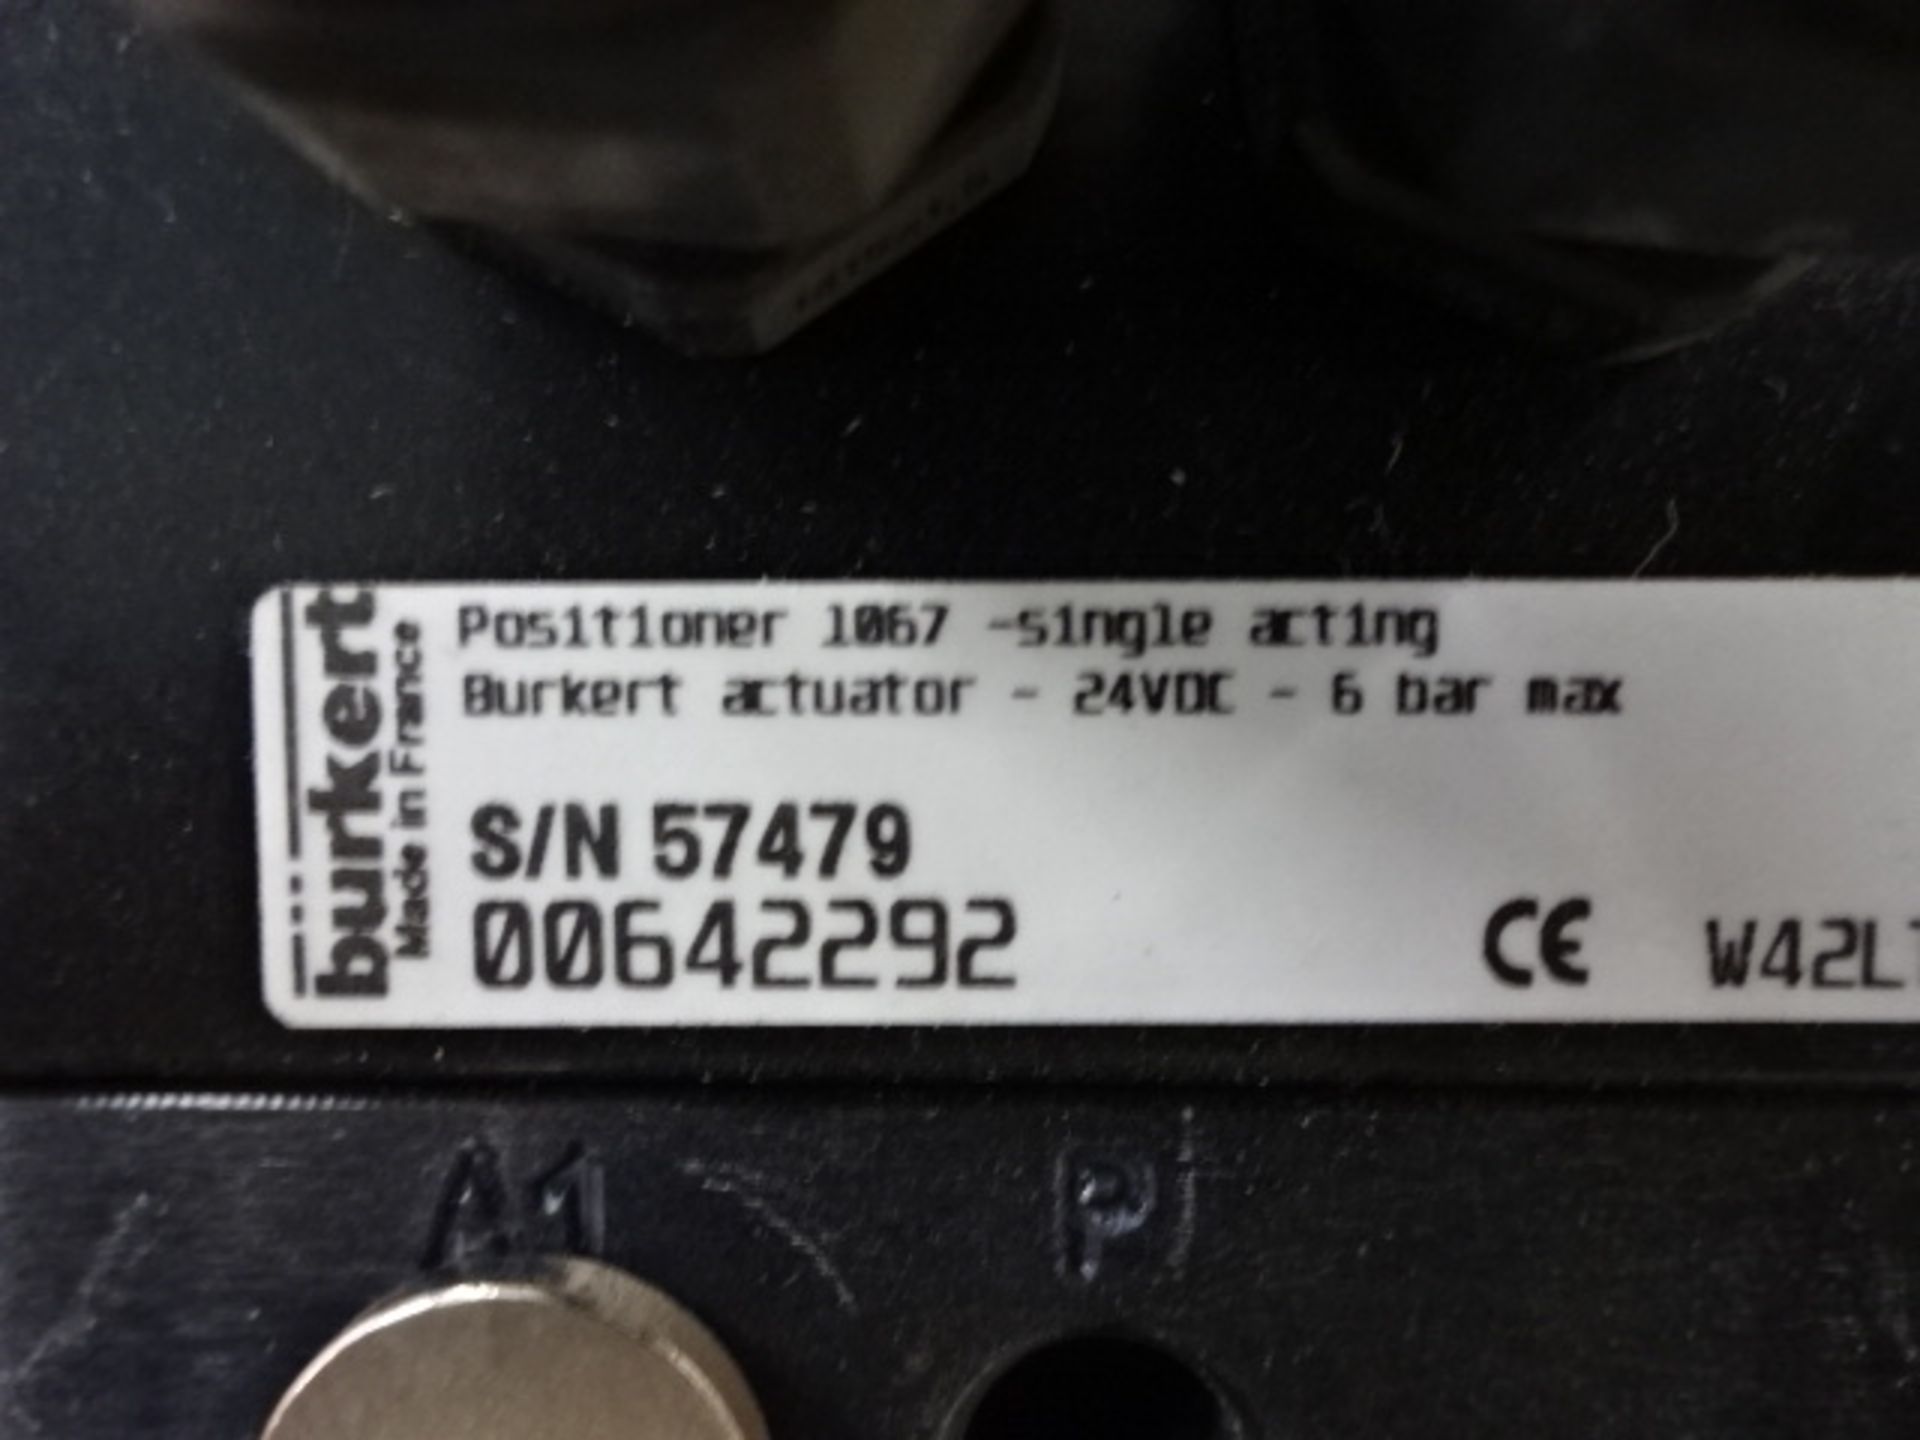 positioner Burkert actuator - Image 3 of 3